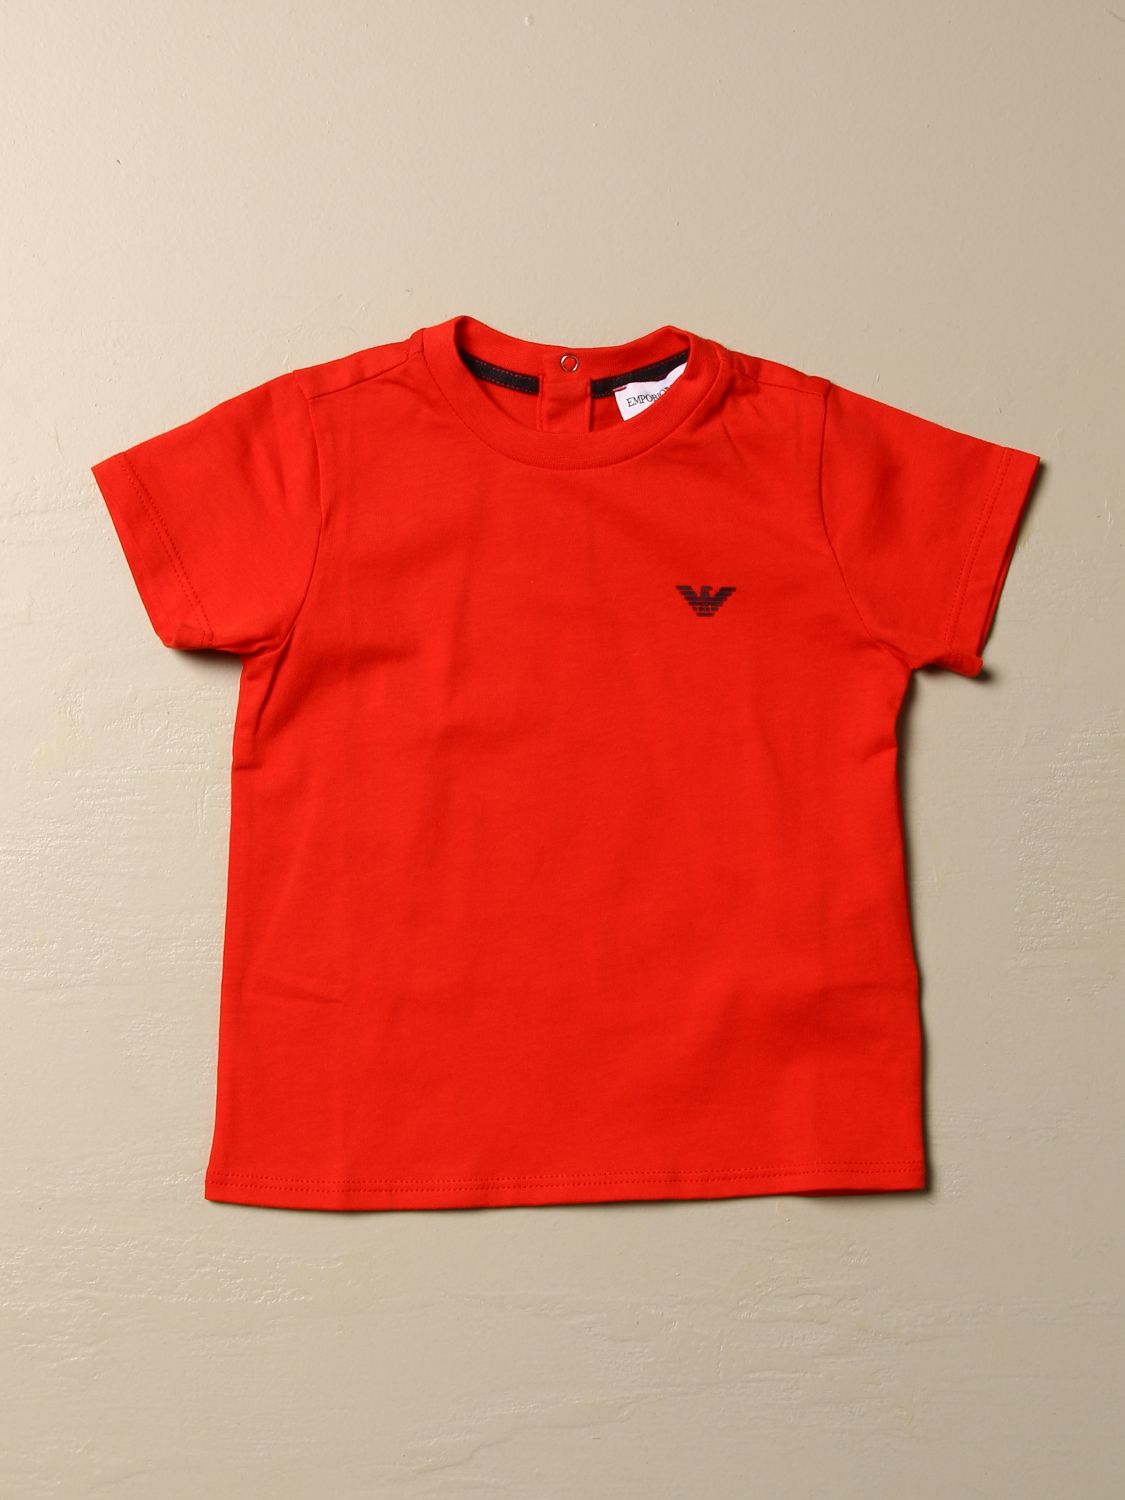 red armani t shirt